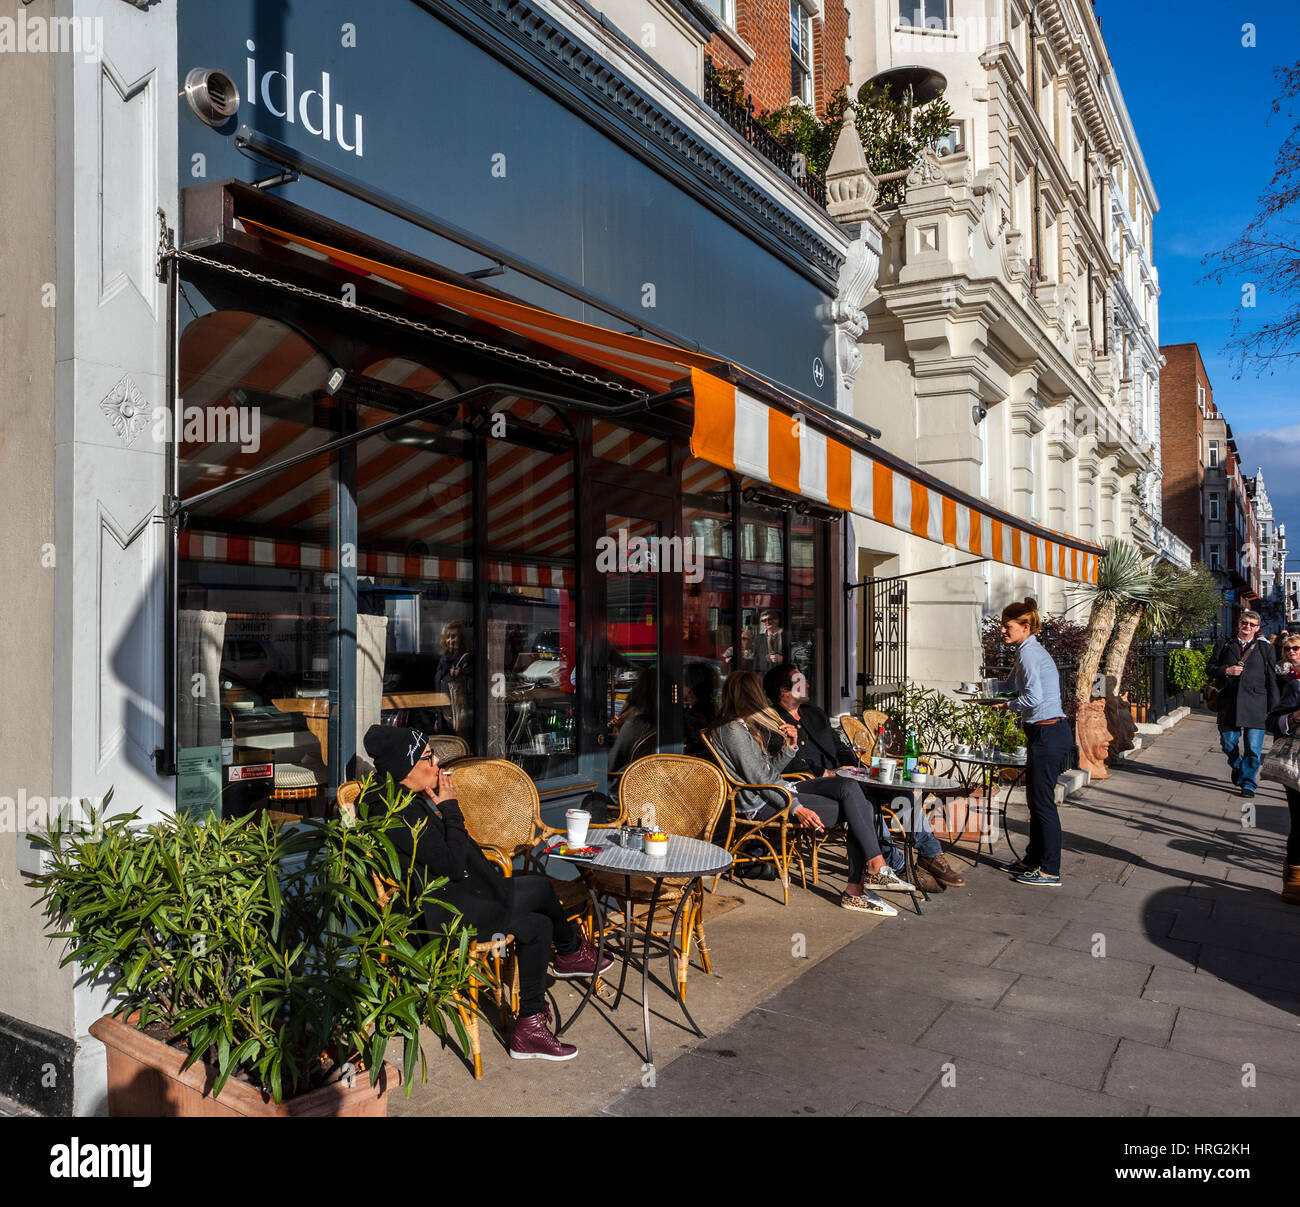 iddu Restaurant, South Kensington, London Stock Photo